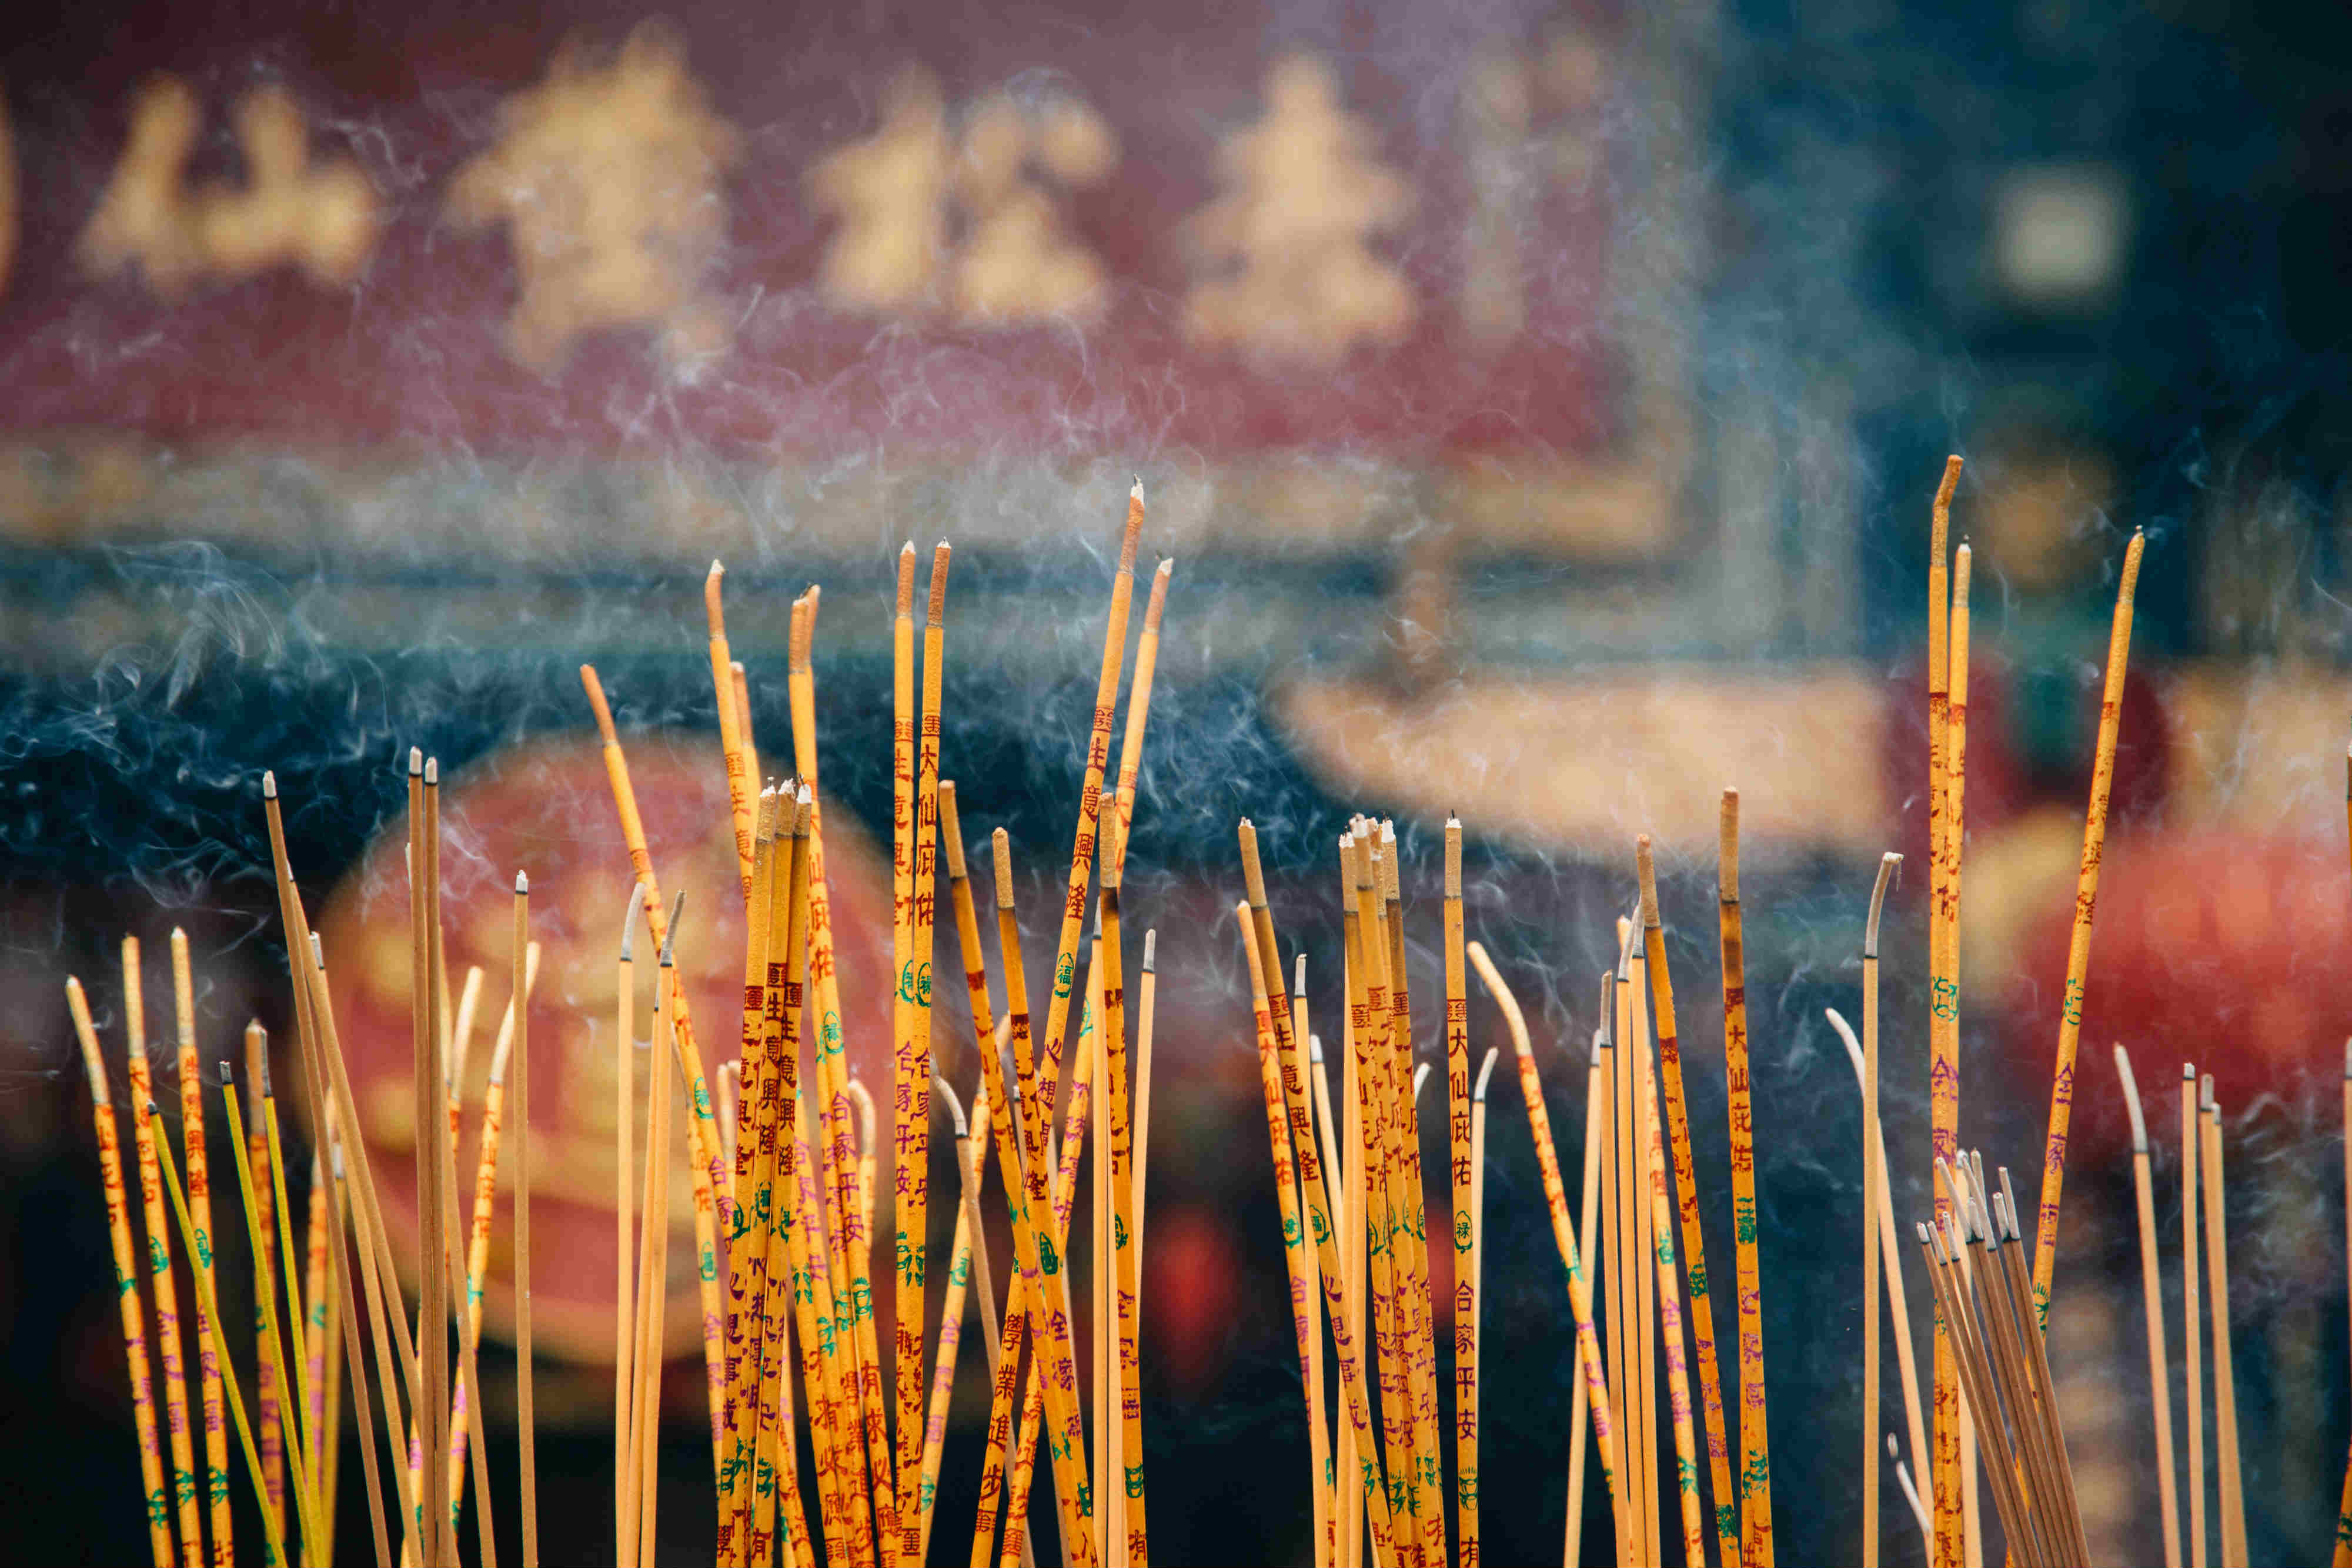 Burning incense. (Photo: Chloe Evans/Unsplash)